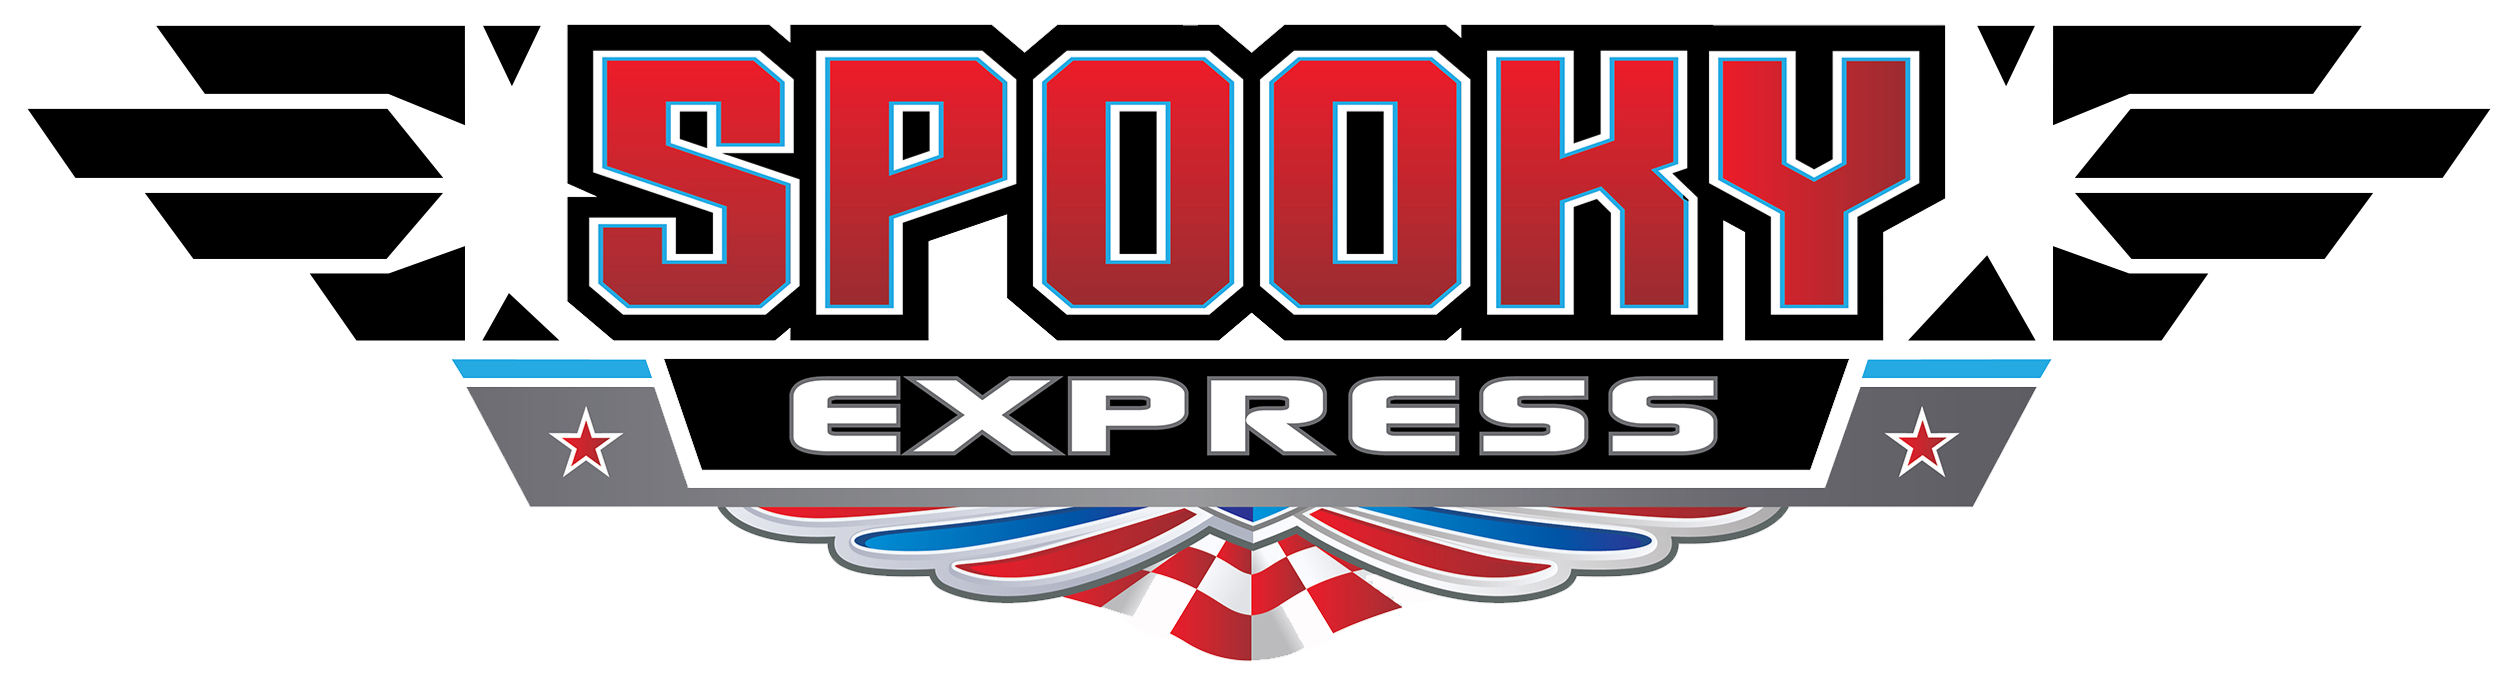 Spooky Express logo